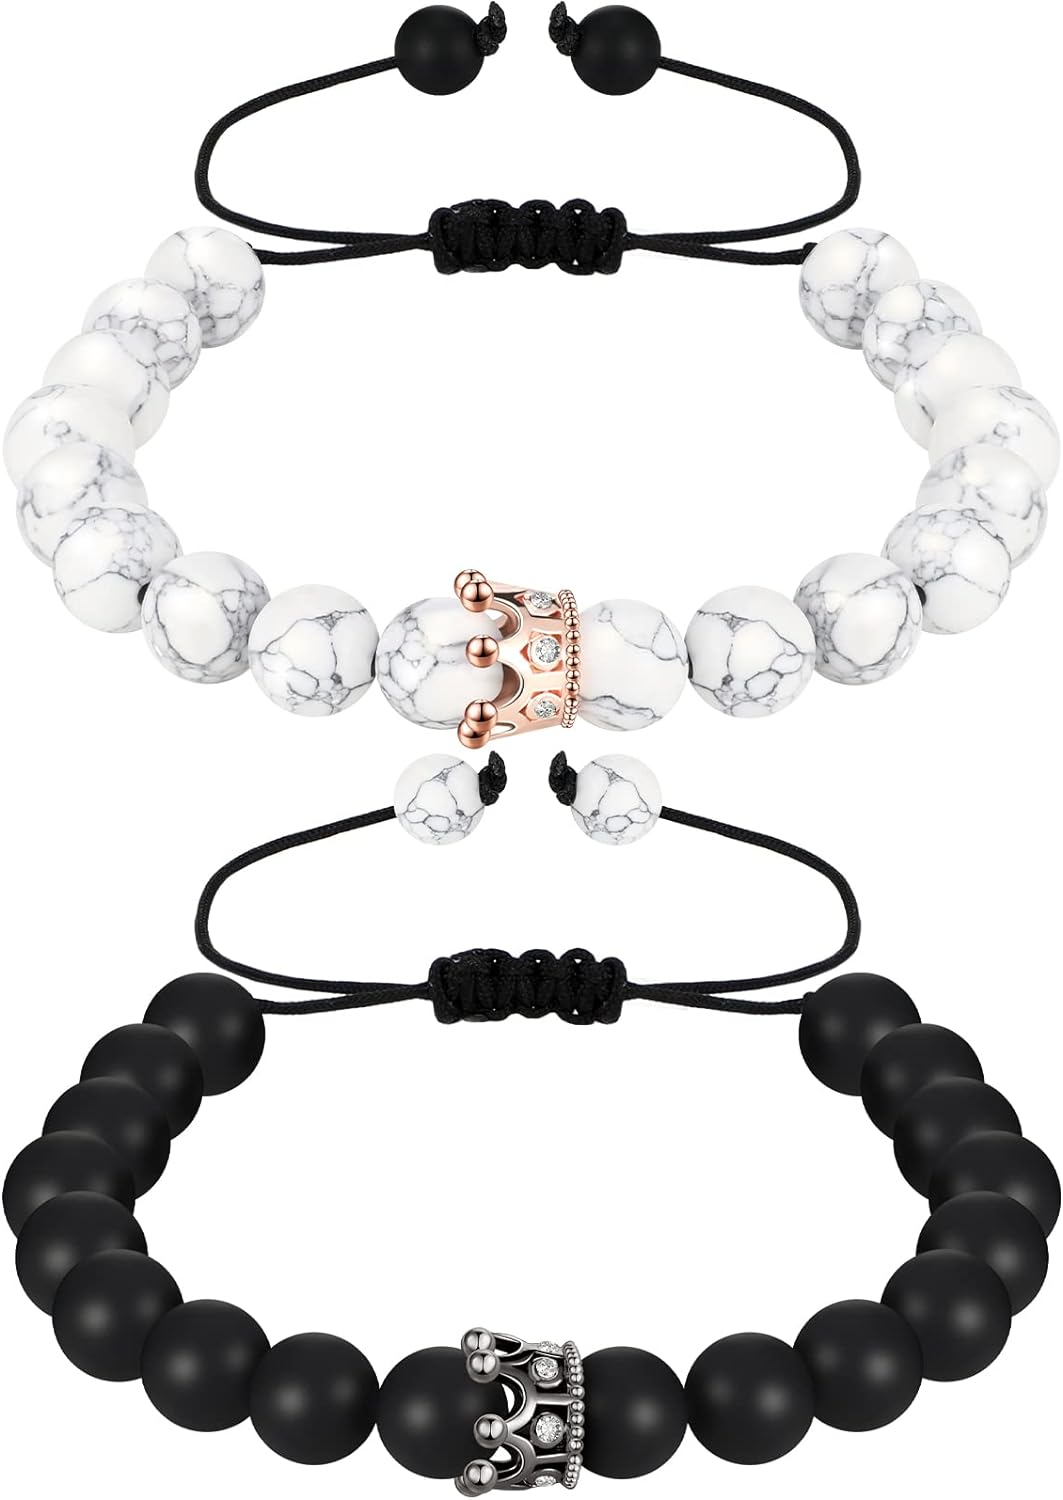 BBTO Howlite Bracelet Black Matte Agate Bracelet Couples Bracelet Distance Bracelet Energy Beads Bracelet for Valentine' Day Present